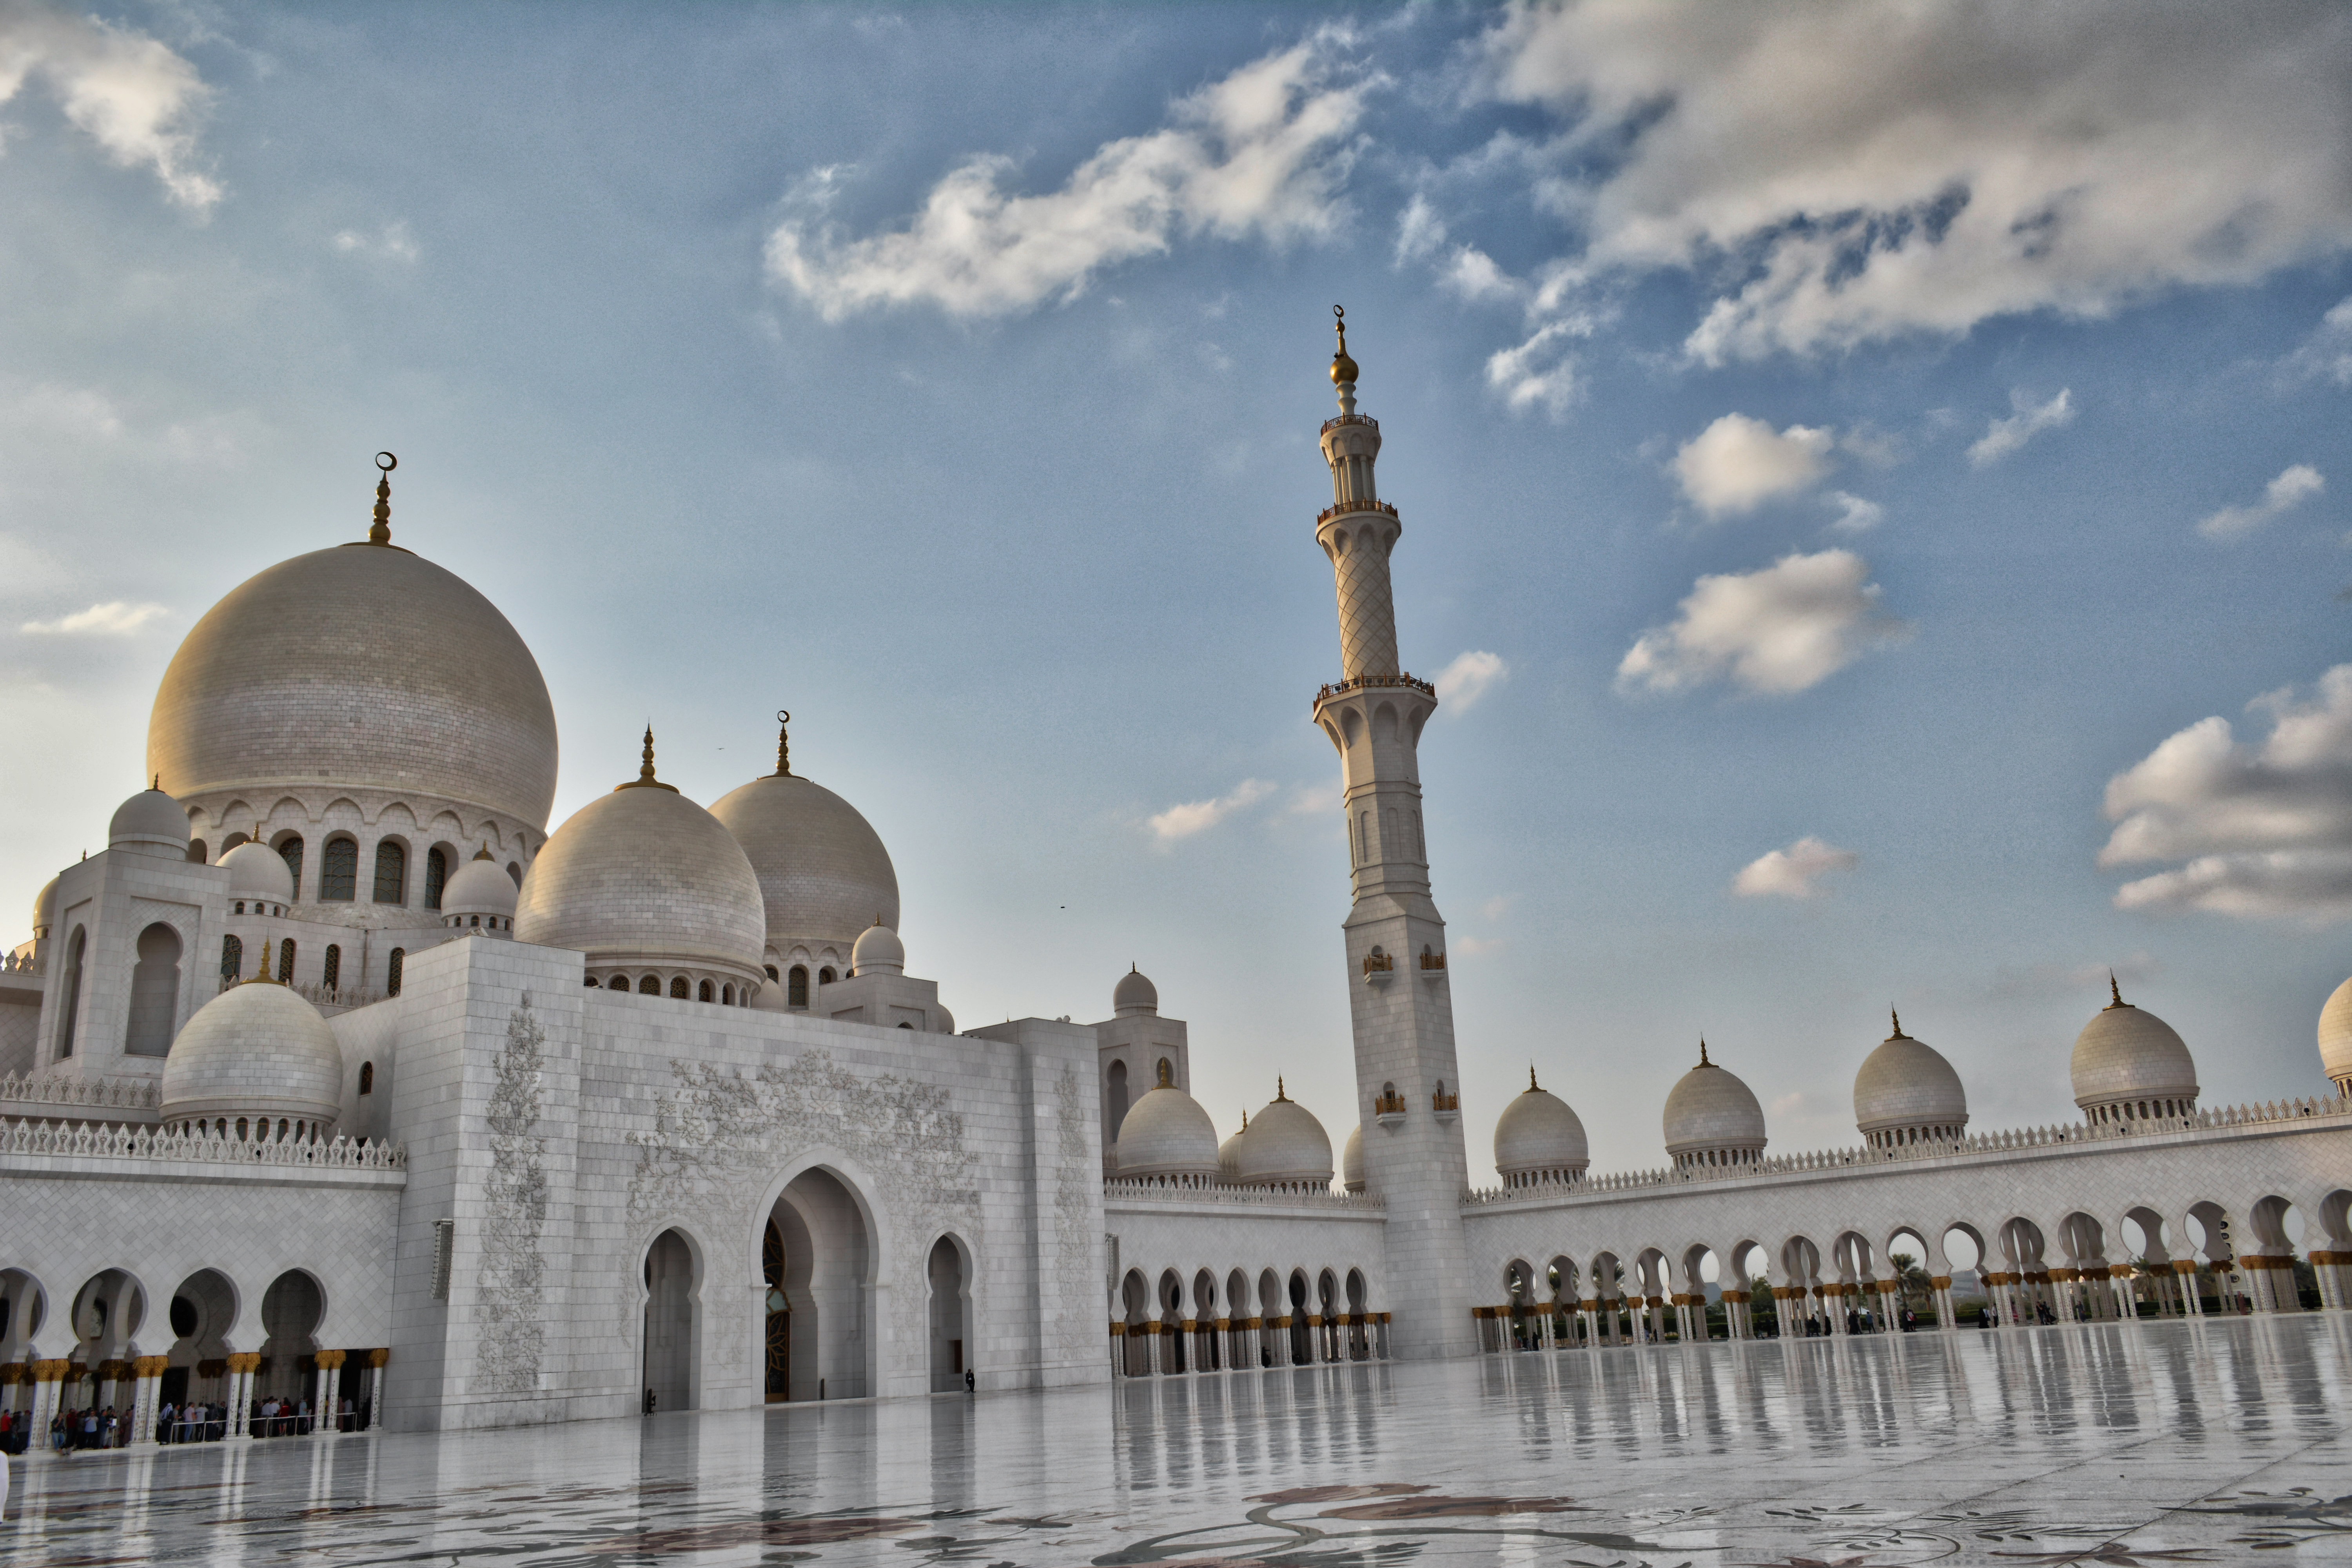 General 6000x4000 Abu Dhabi Grand Mosque Islamic architecture